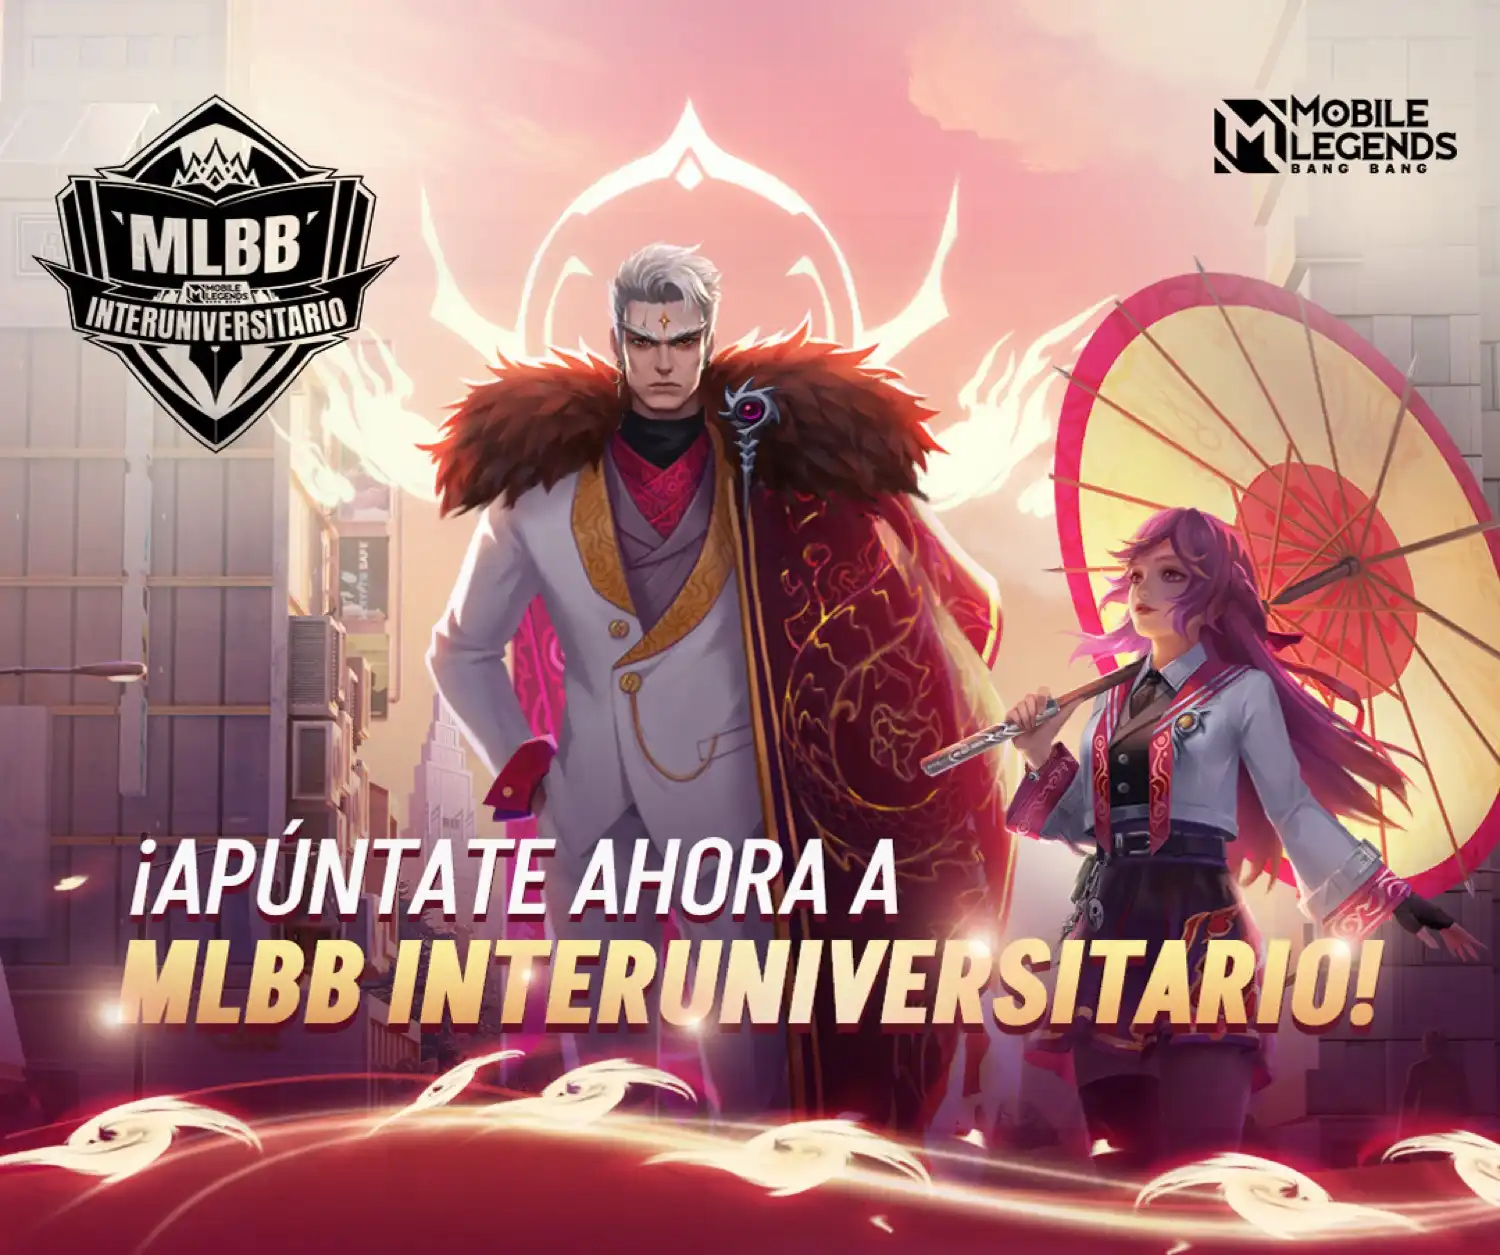 Mobile Legends: Bang Bang: Torneo Interuniversitario en Perú